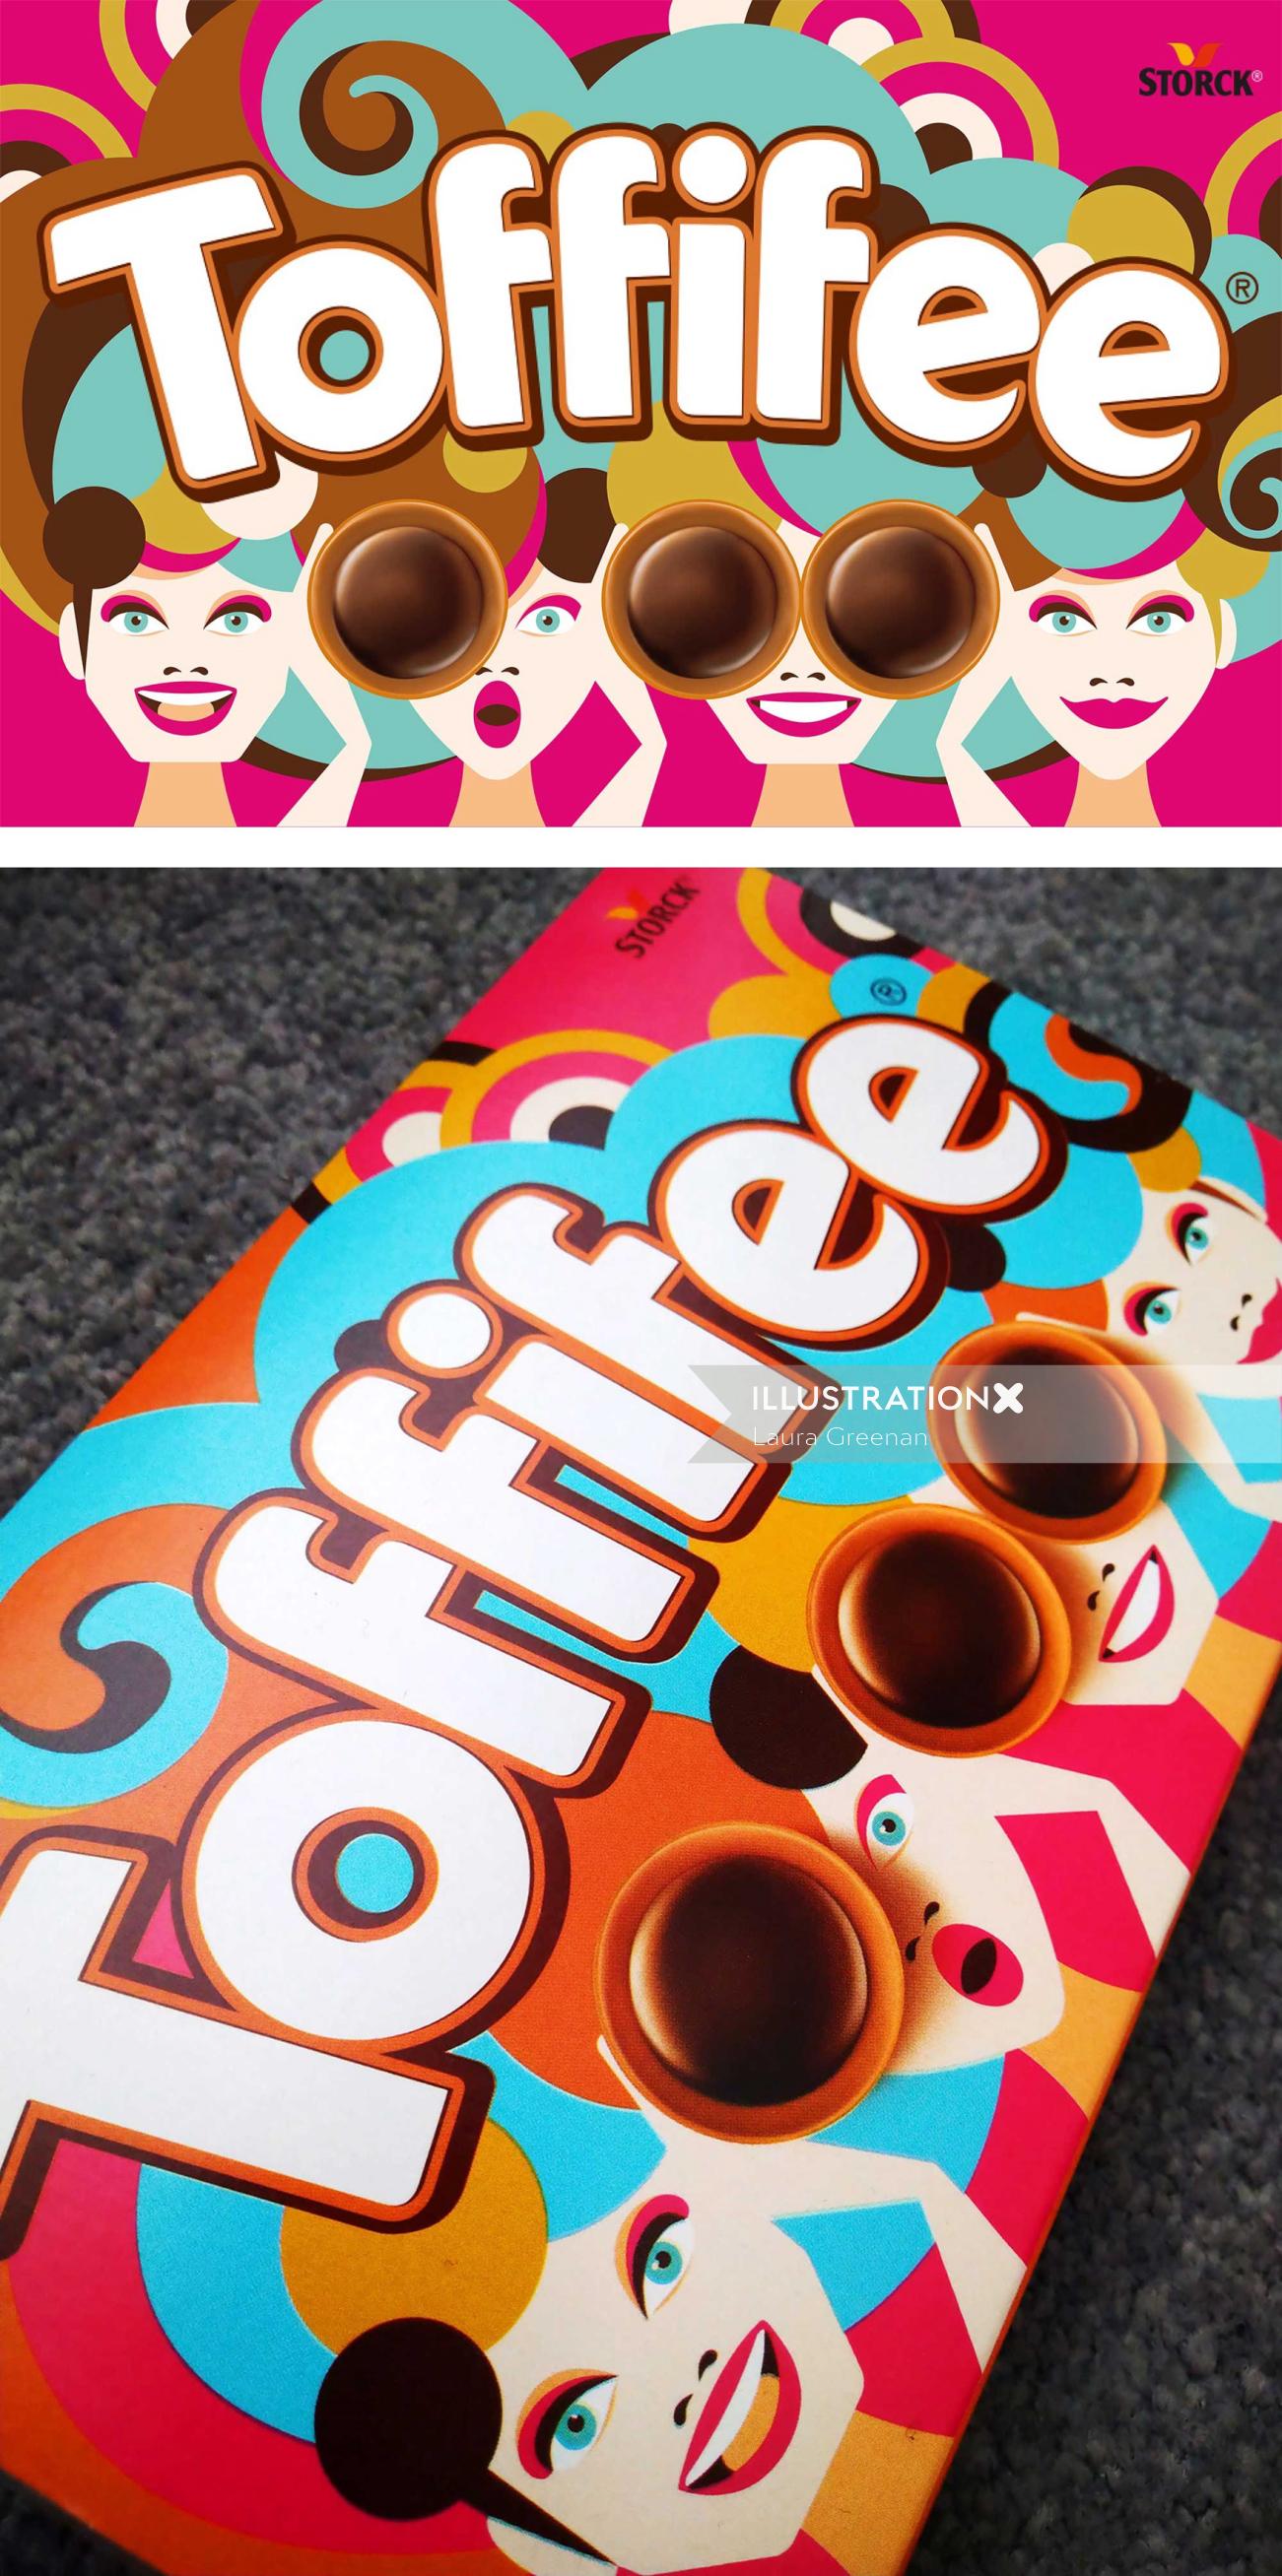 Toffifee: Family Edition Packaging illustration